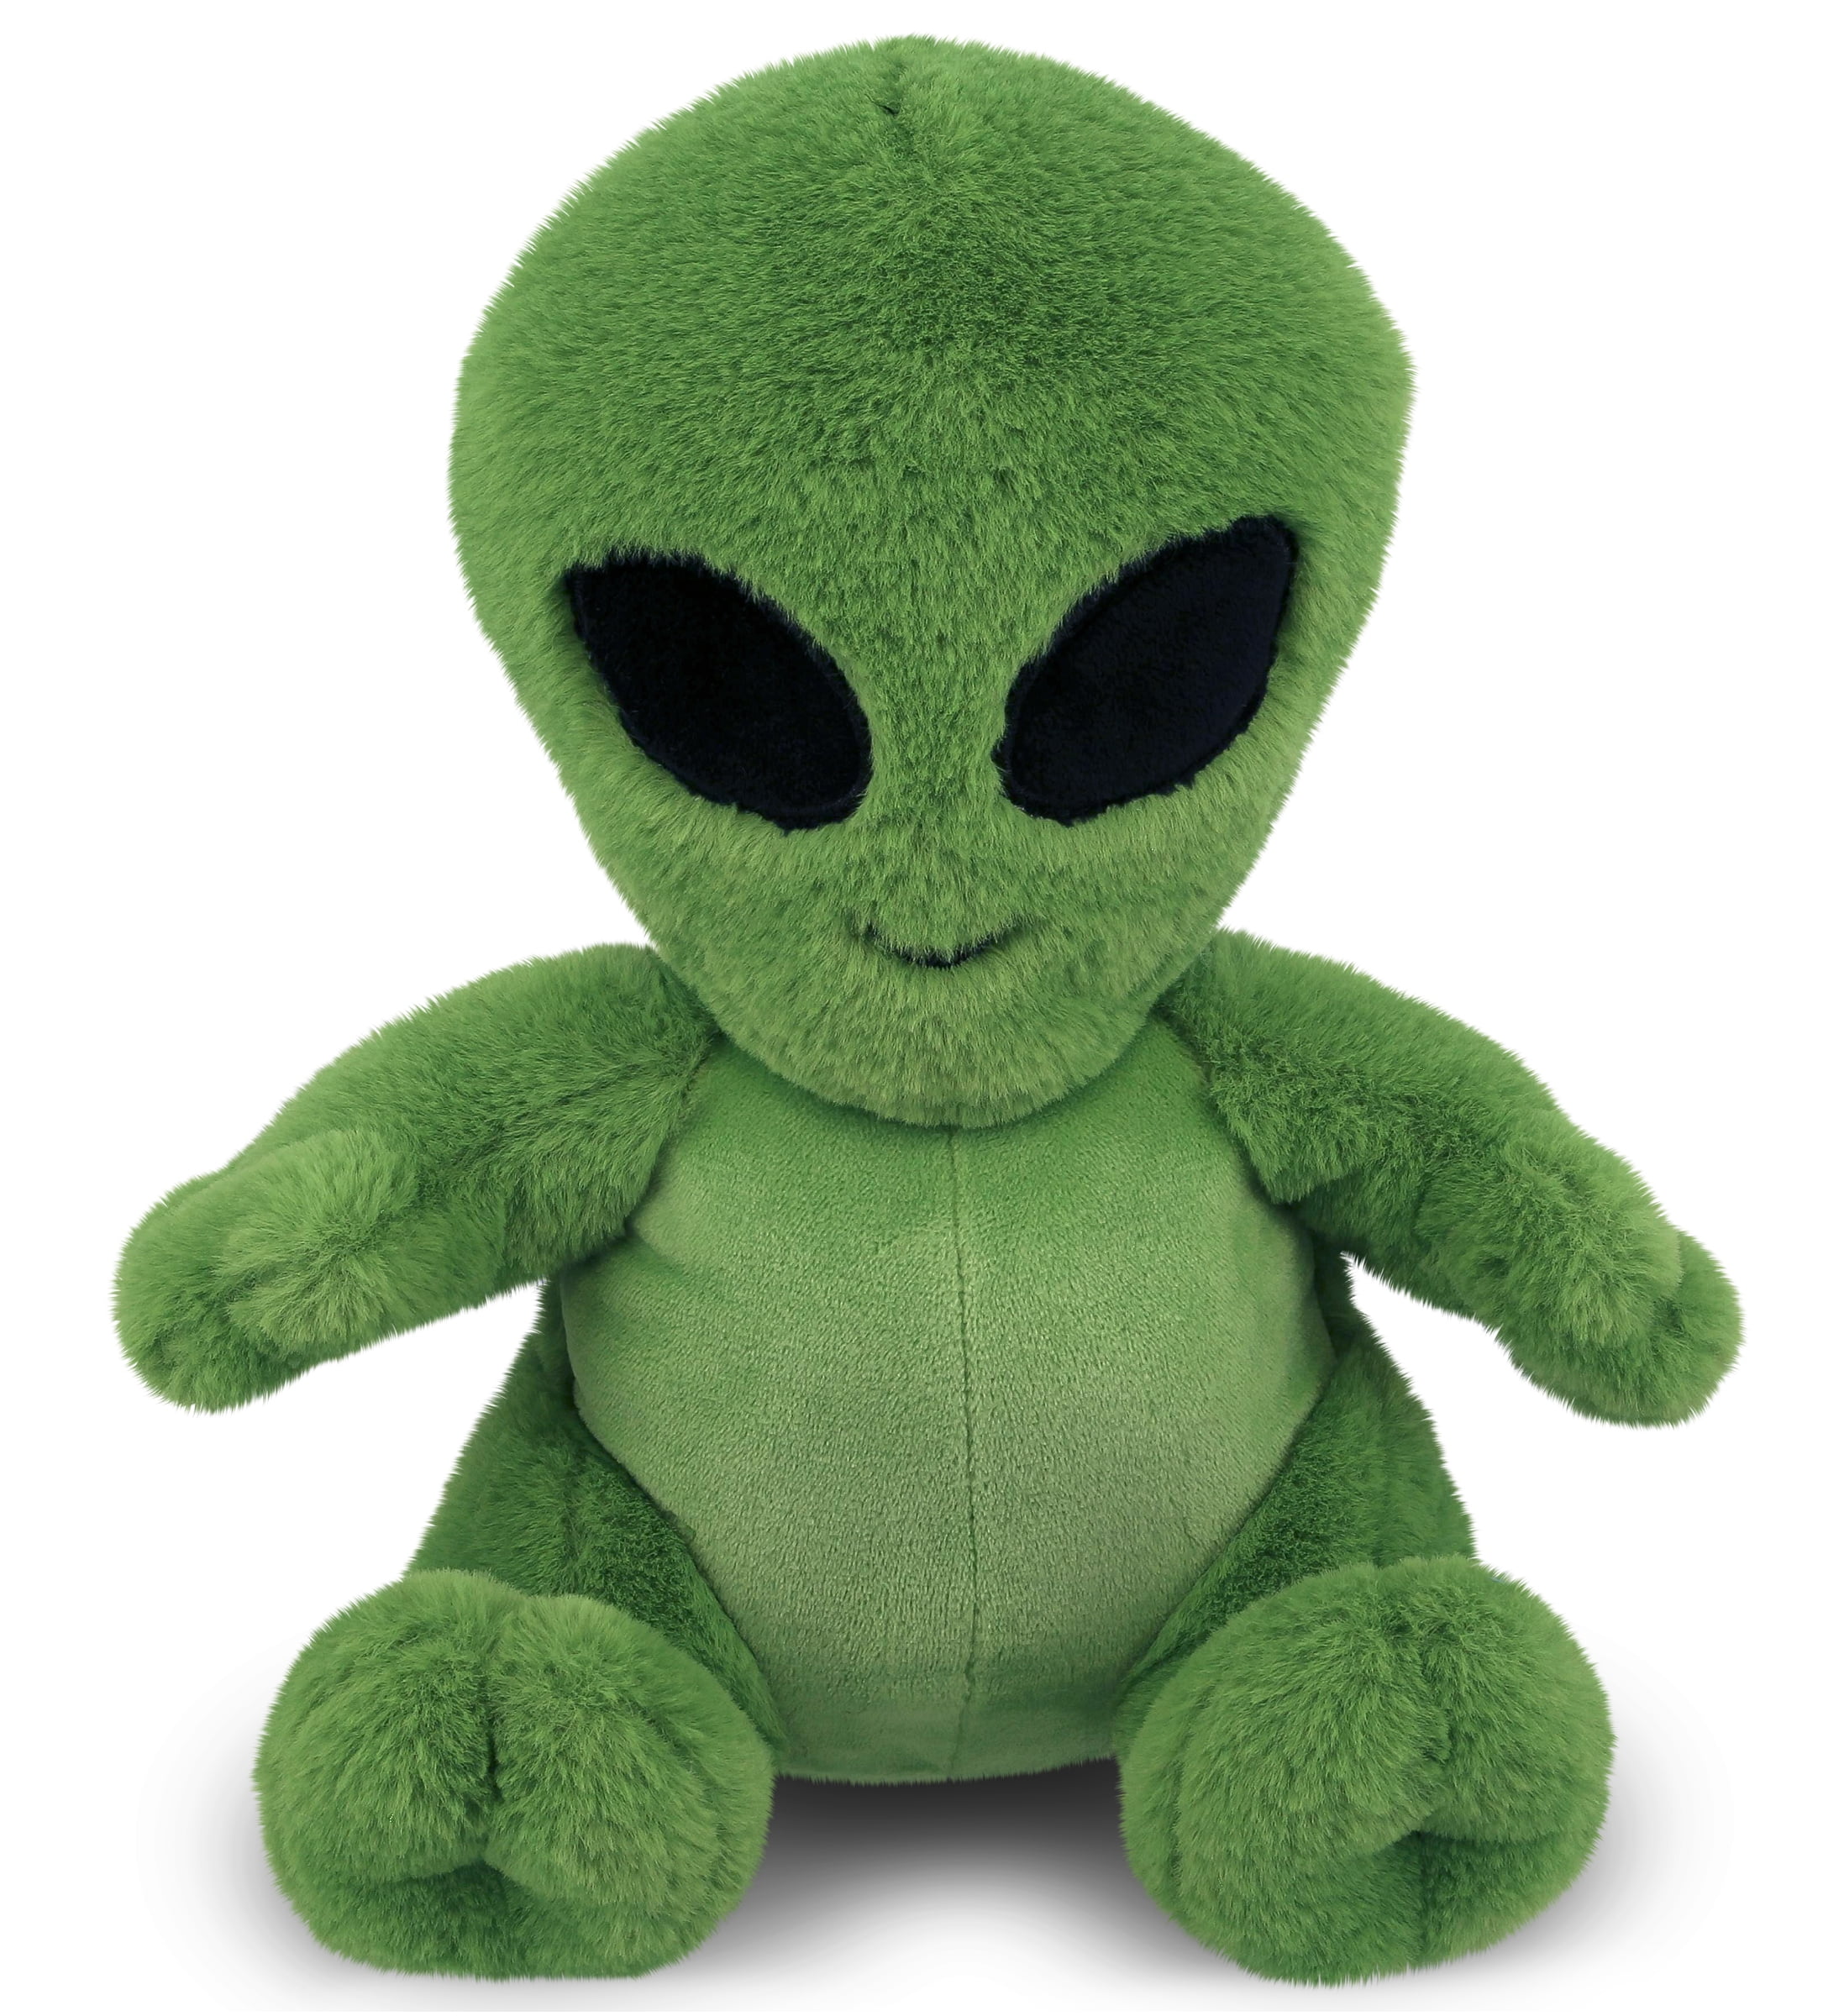 DolliBu Plush Alien Stuffed Toy – Soft Huggable Green Alien, Adorable ...